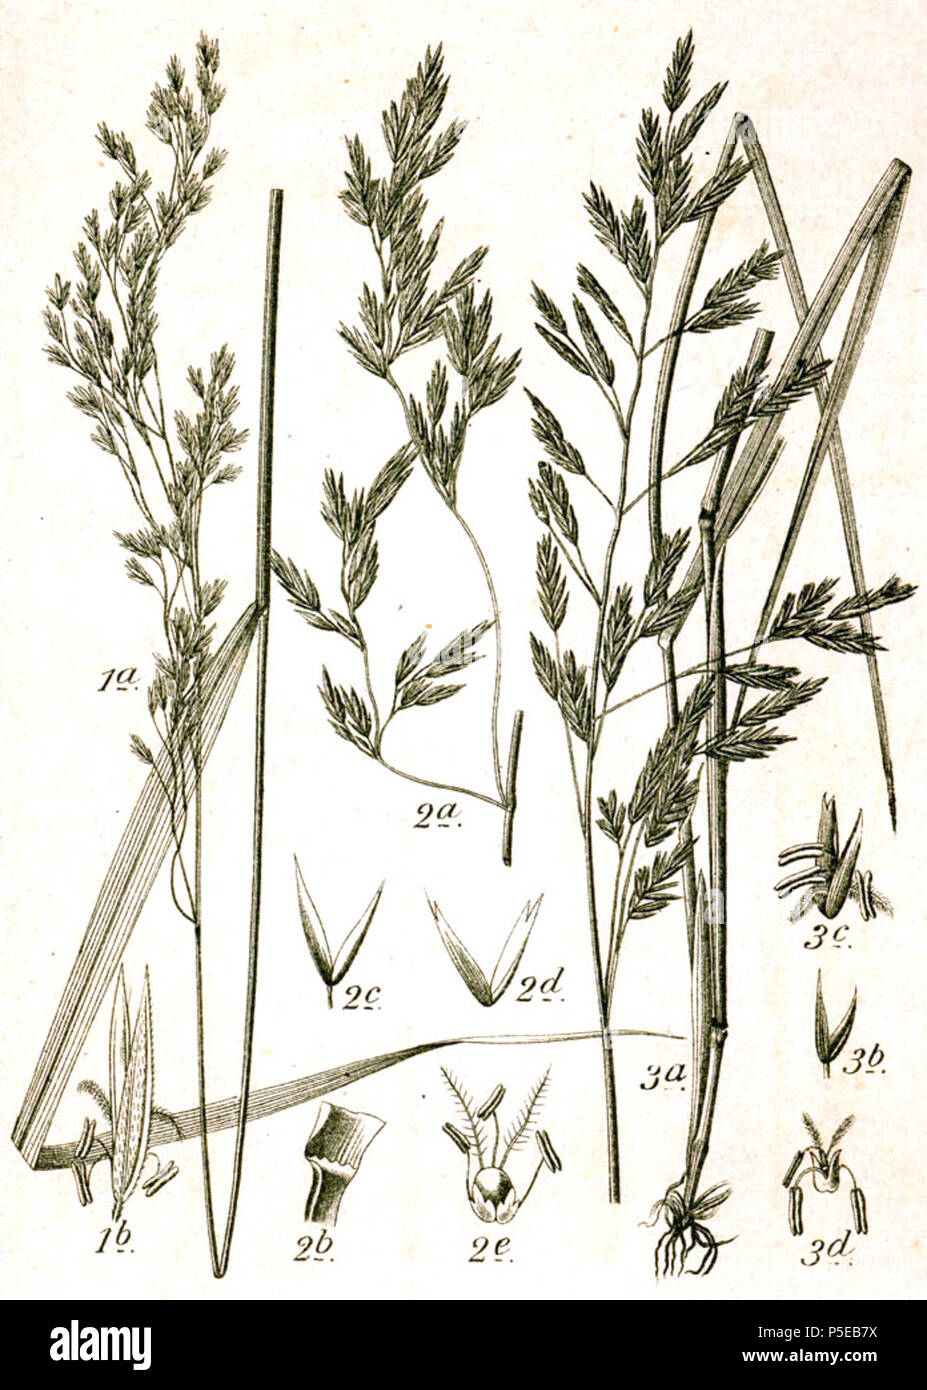 N/A. 1: Festuca altissima All., Festuca sylvatica (Pollich) Vill. 2: Festuca arundinacea Schreb., syn. Schedonorus arundinaceus (Schreb.) Dumort., nom. ill. 3: Festuca pratensis Huds., syn. Schedonorus pratensis (Huds.) P. Beauv., Festuca elatior L. Original Caption 1. Wald-Schwingel, Festuca sylvatica Vill. 2. Rohr-Schwingel, F. arundinacea Schreb. 3. Wiesen-Schwingel, F. elatior L. . 1796. Johann Georg Sturm (Painter: Jacob Sturm) 554 Festuca spp Sturm45 Stock Photo